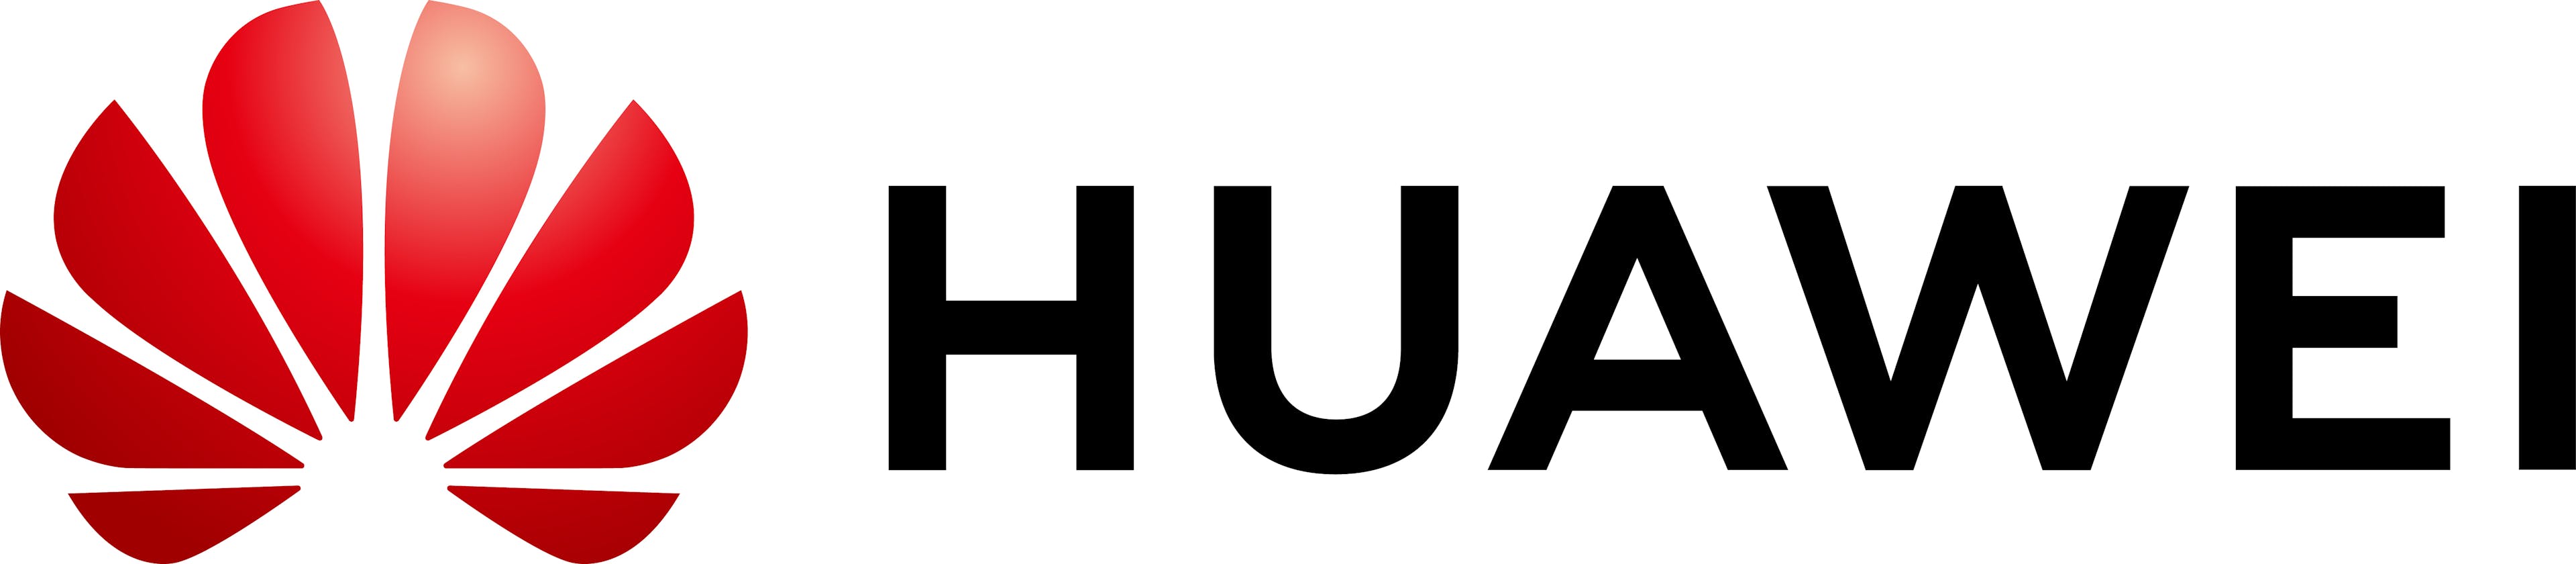 Huawei Technologies Co. Ltd